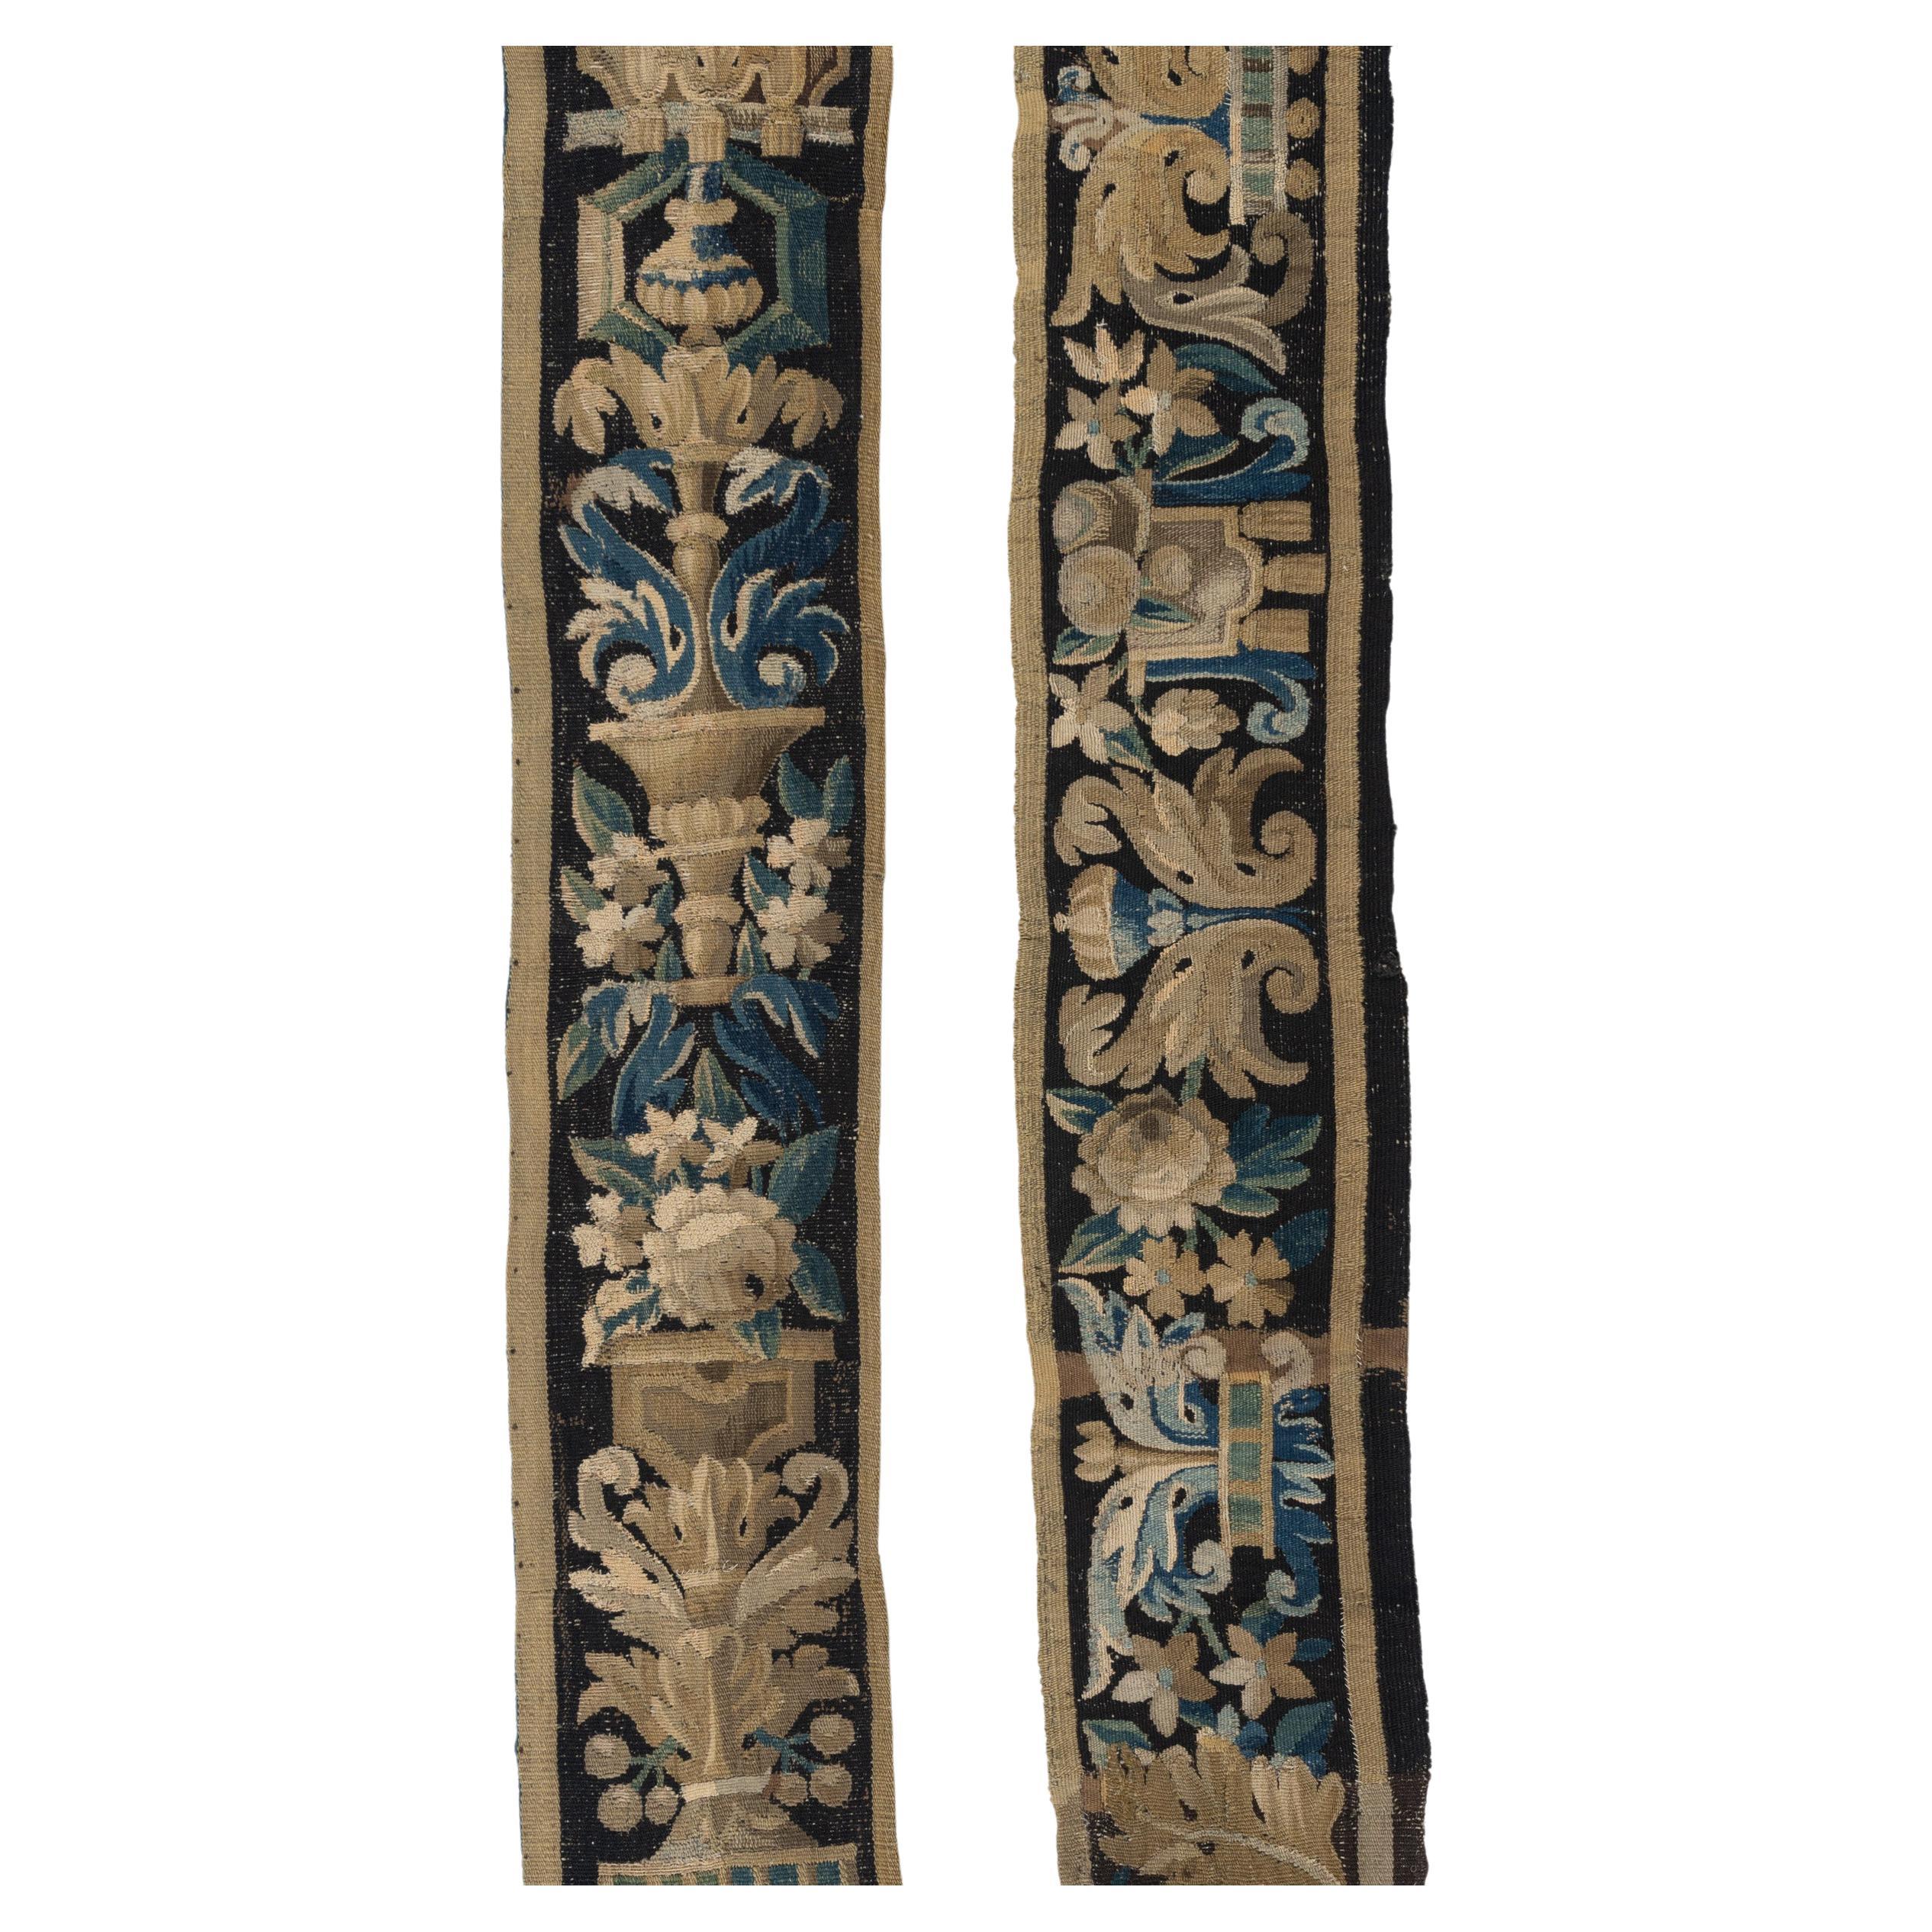 Pair of Aubusson Verdue Tapestry Border Panels  5'10 x 11'